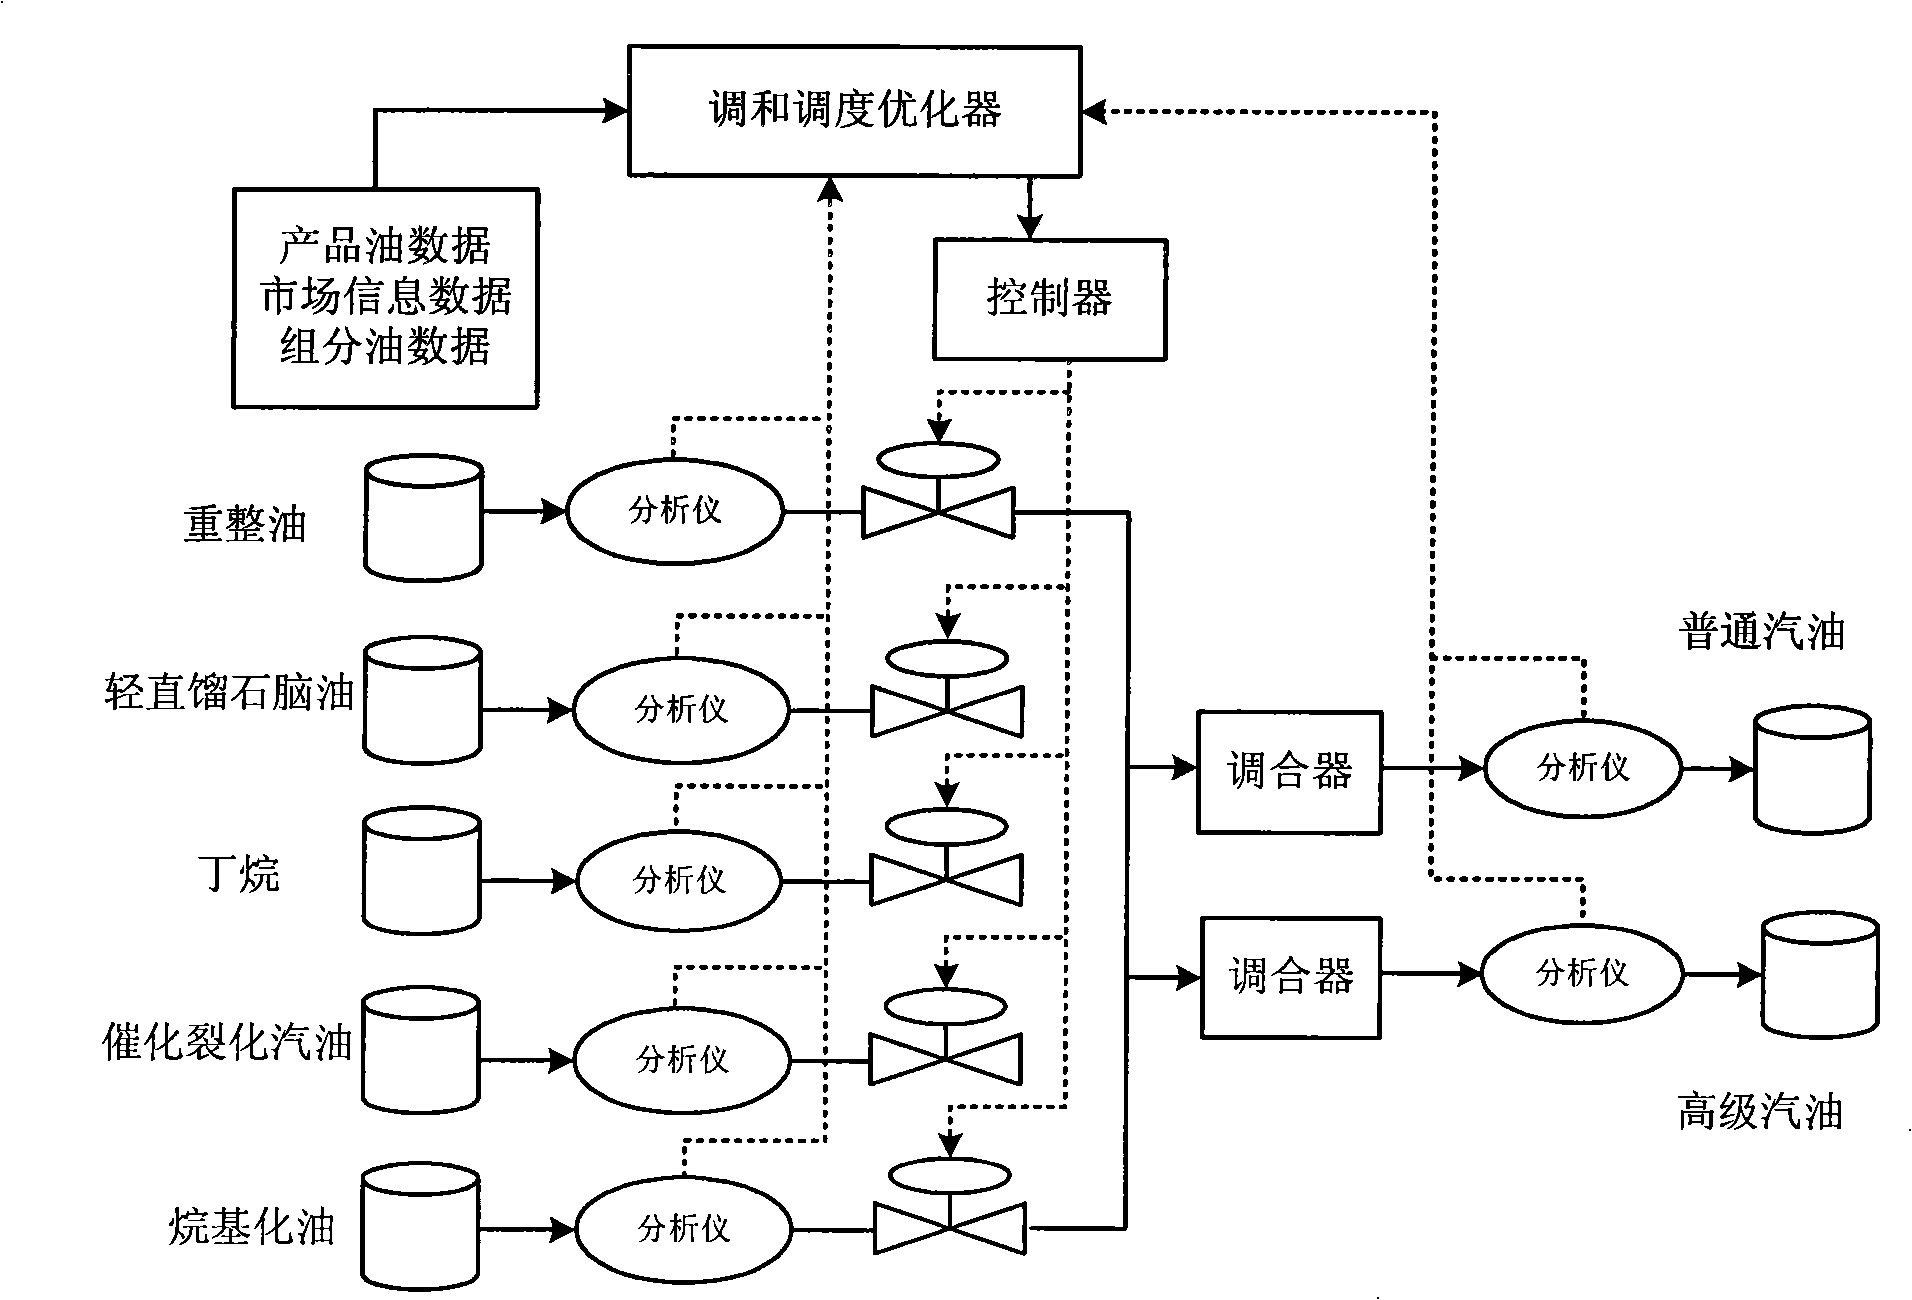 Gasoline concoction optimization scheduling method based on quasi-dictyosome film computation